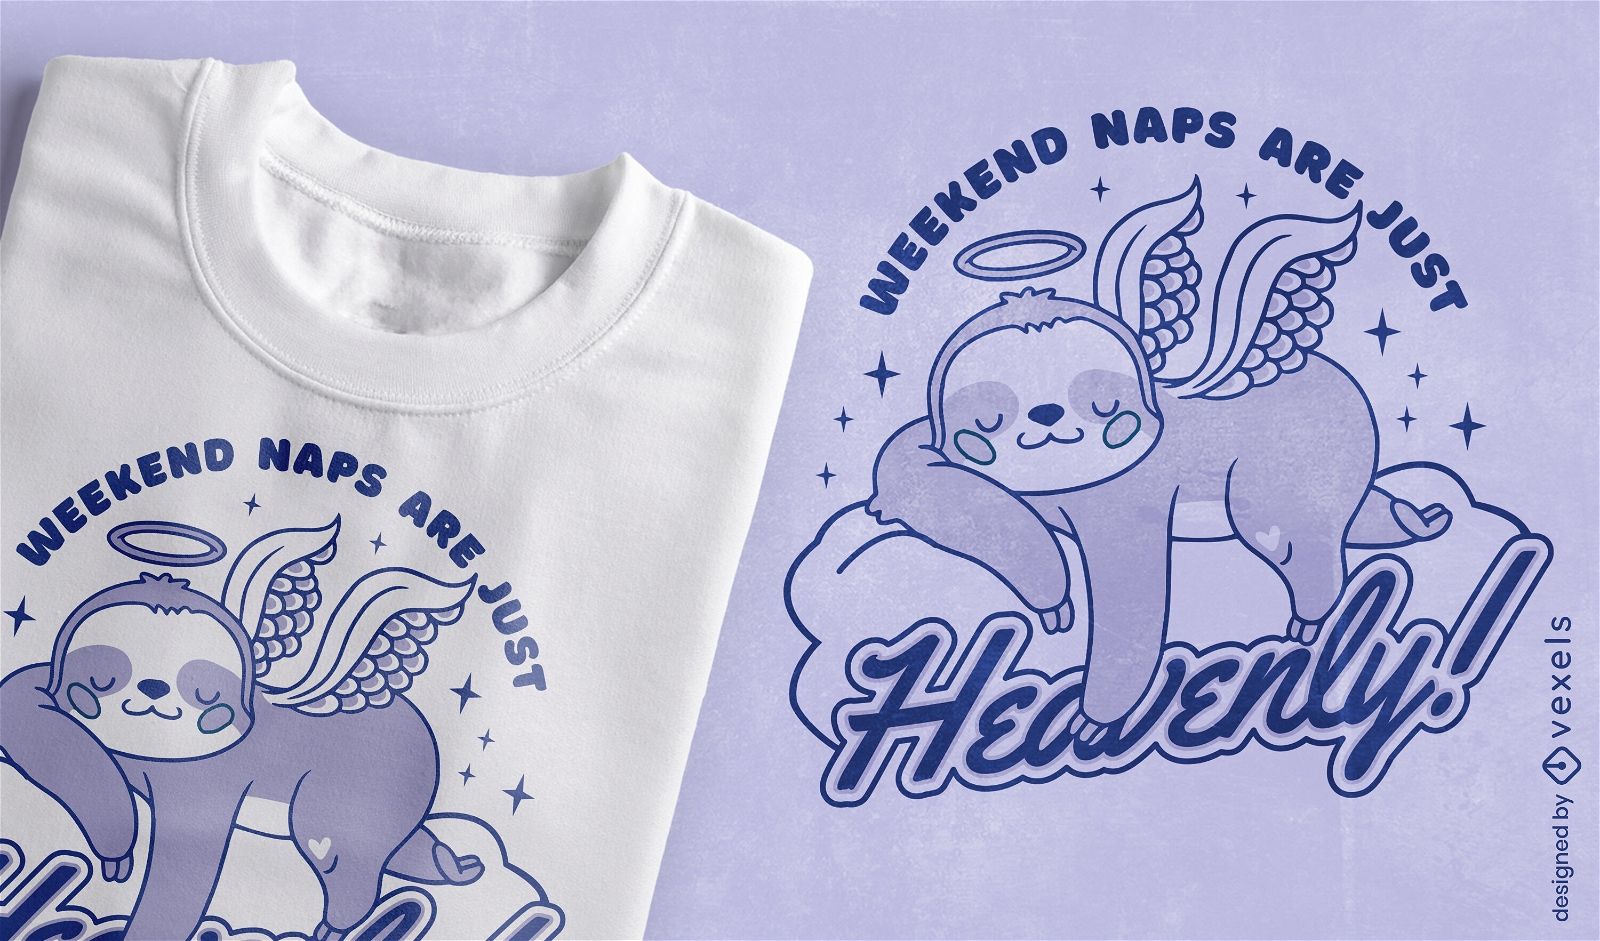 Cute heavenly naps sloth cartoon t-shirt design